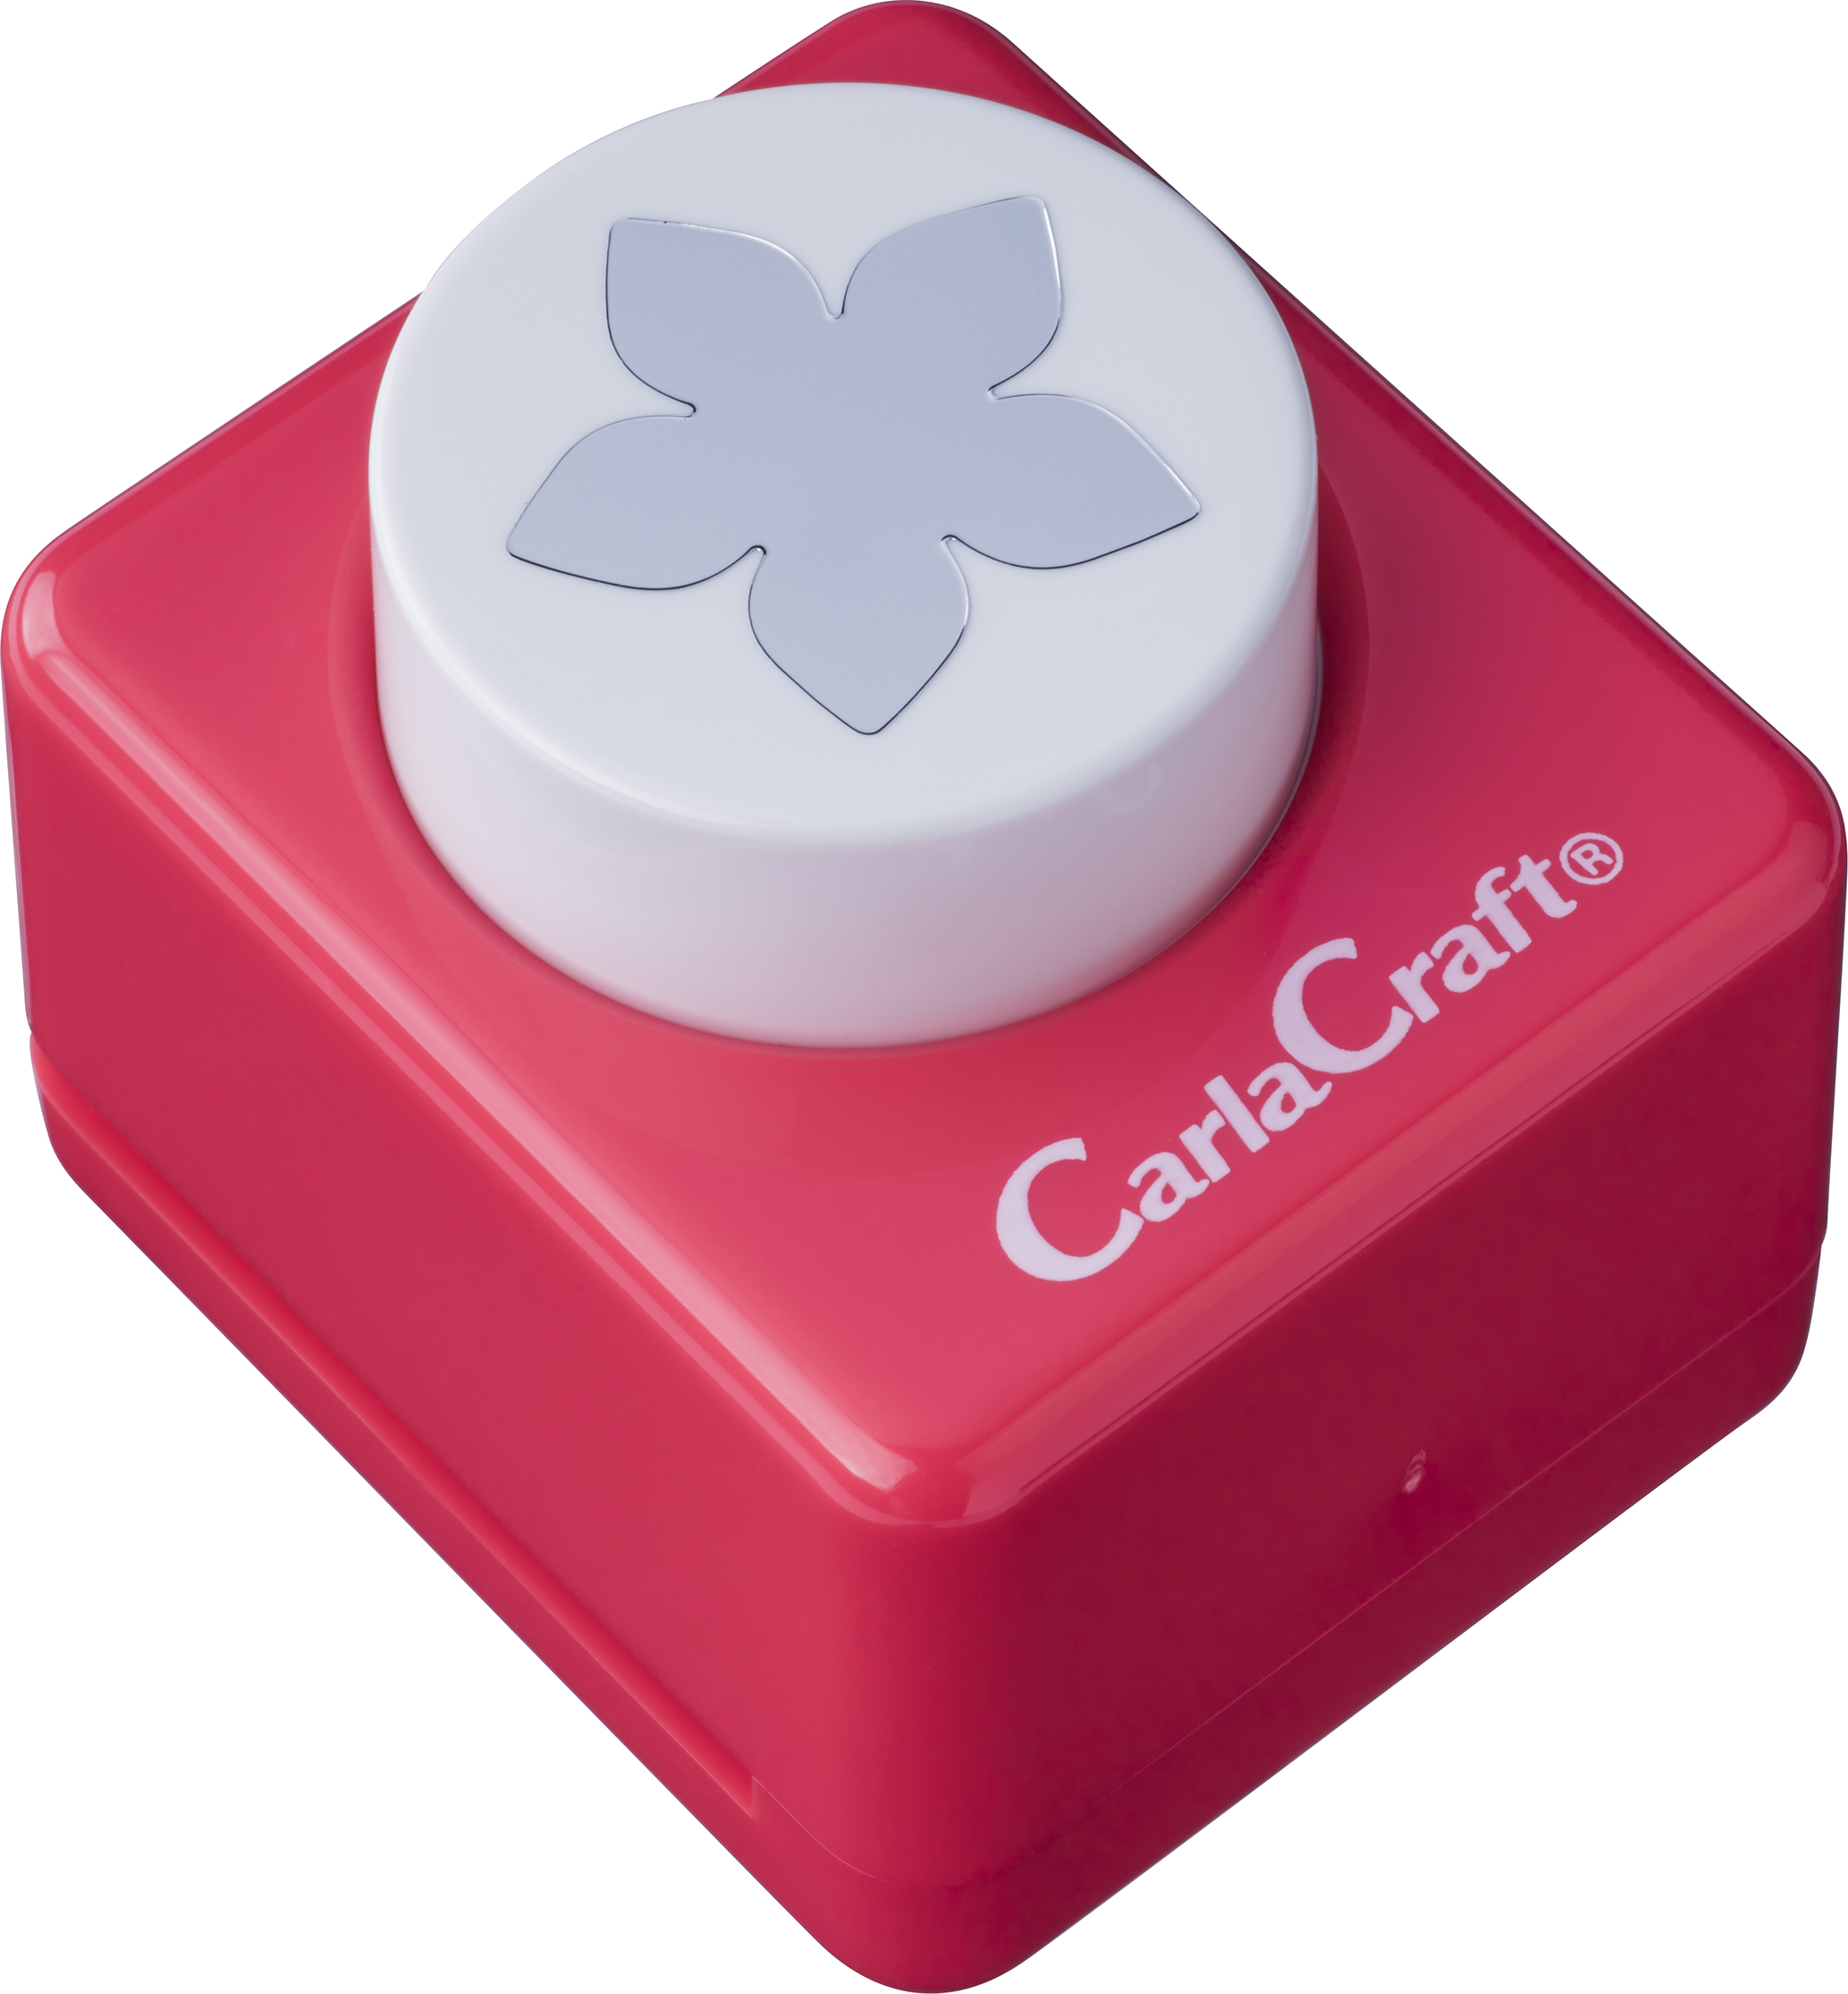 CARL カール事務器 クラフトパンチ CP-2 キキョウ カール事務器 4971760144821